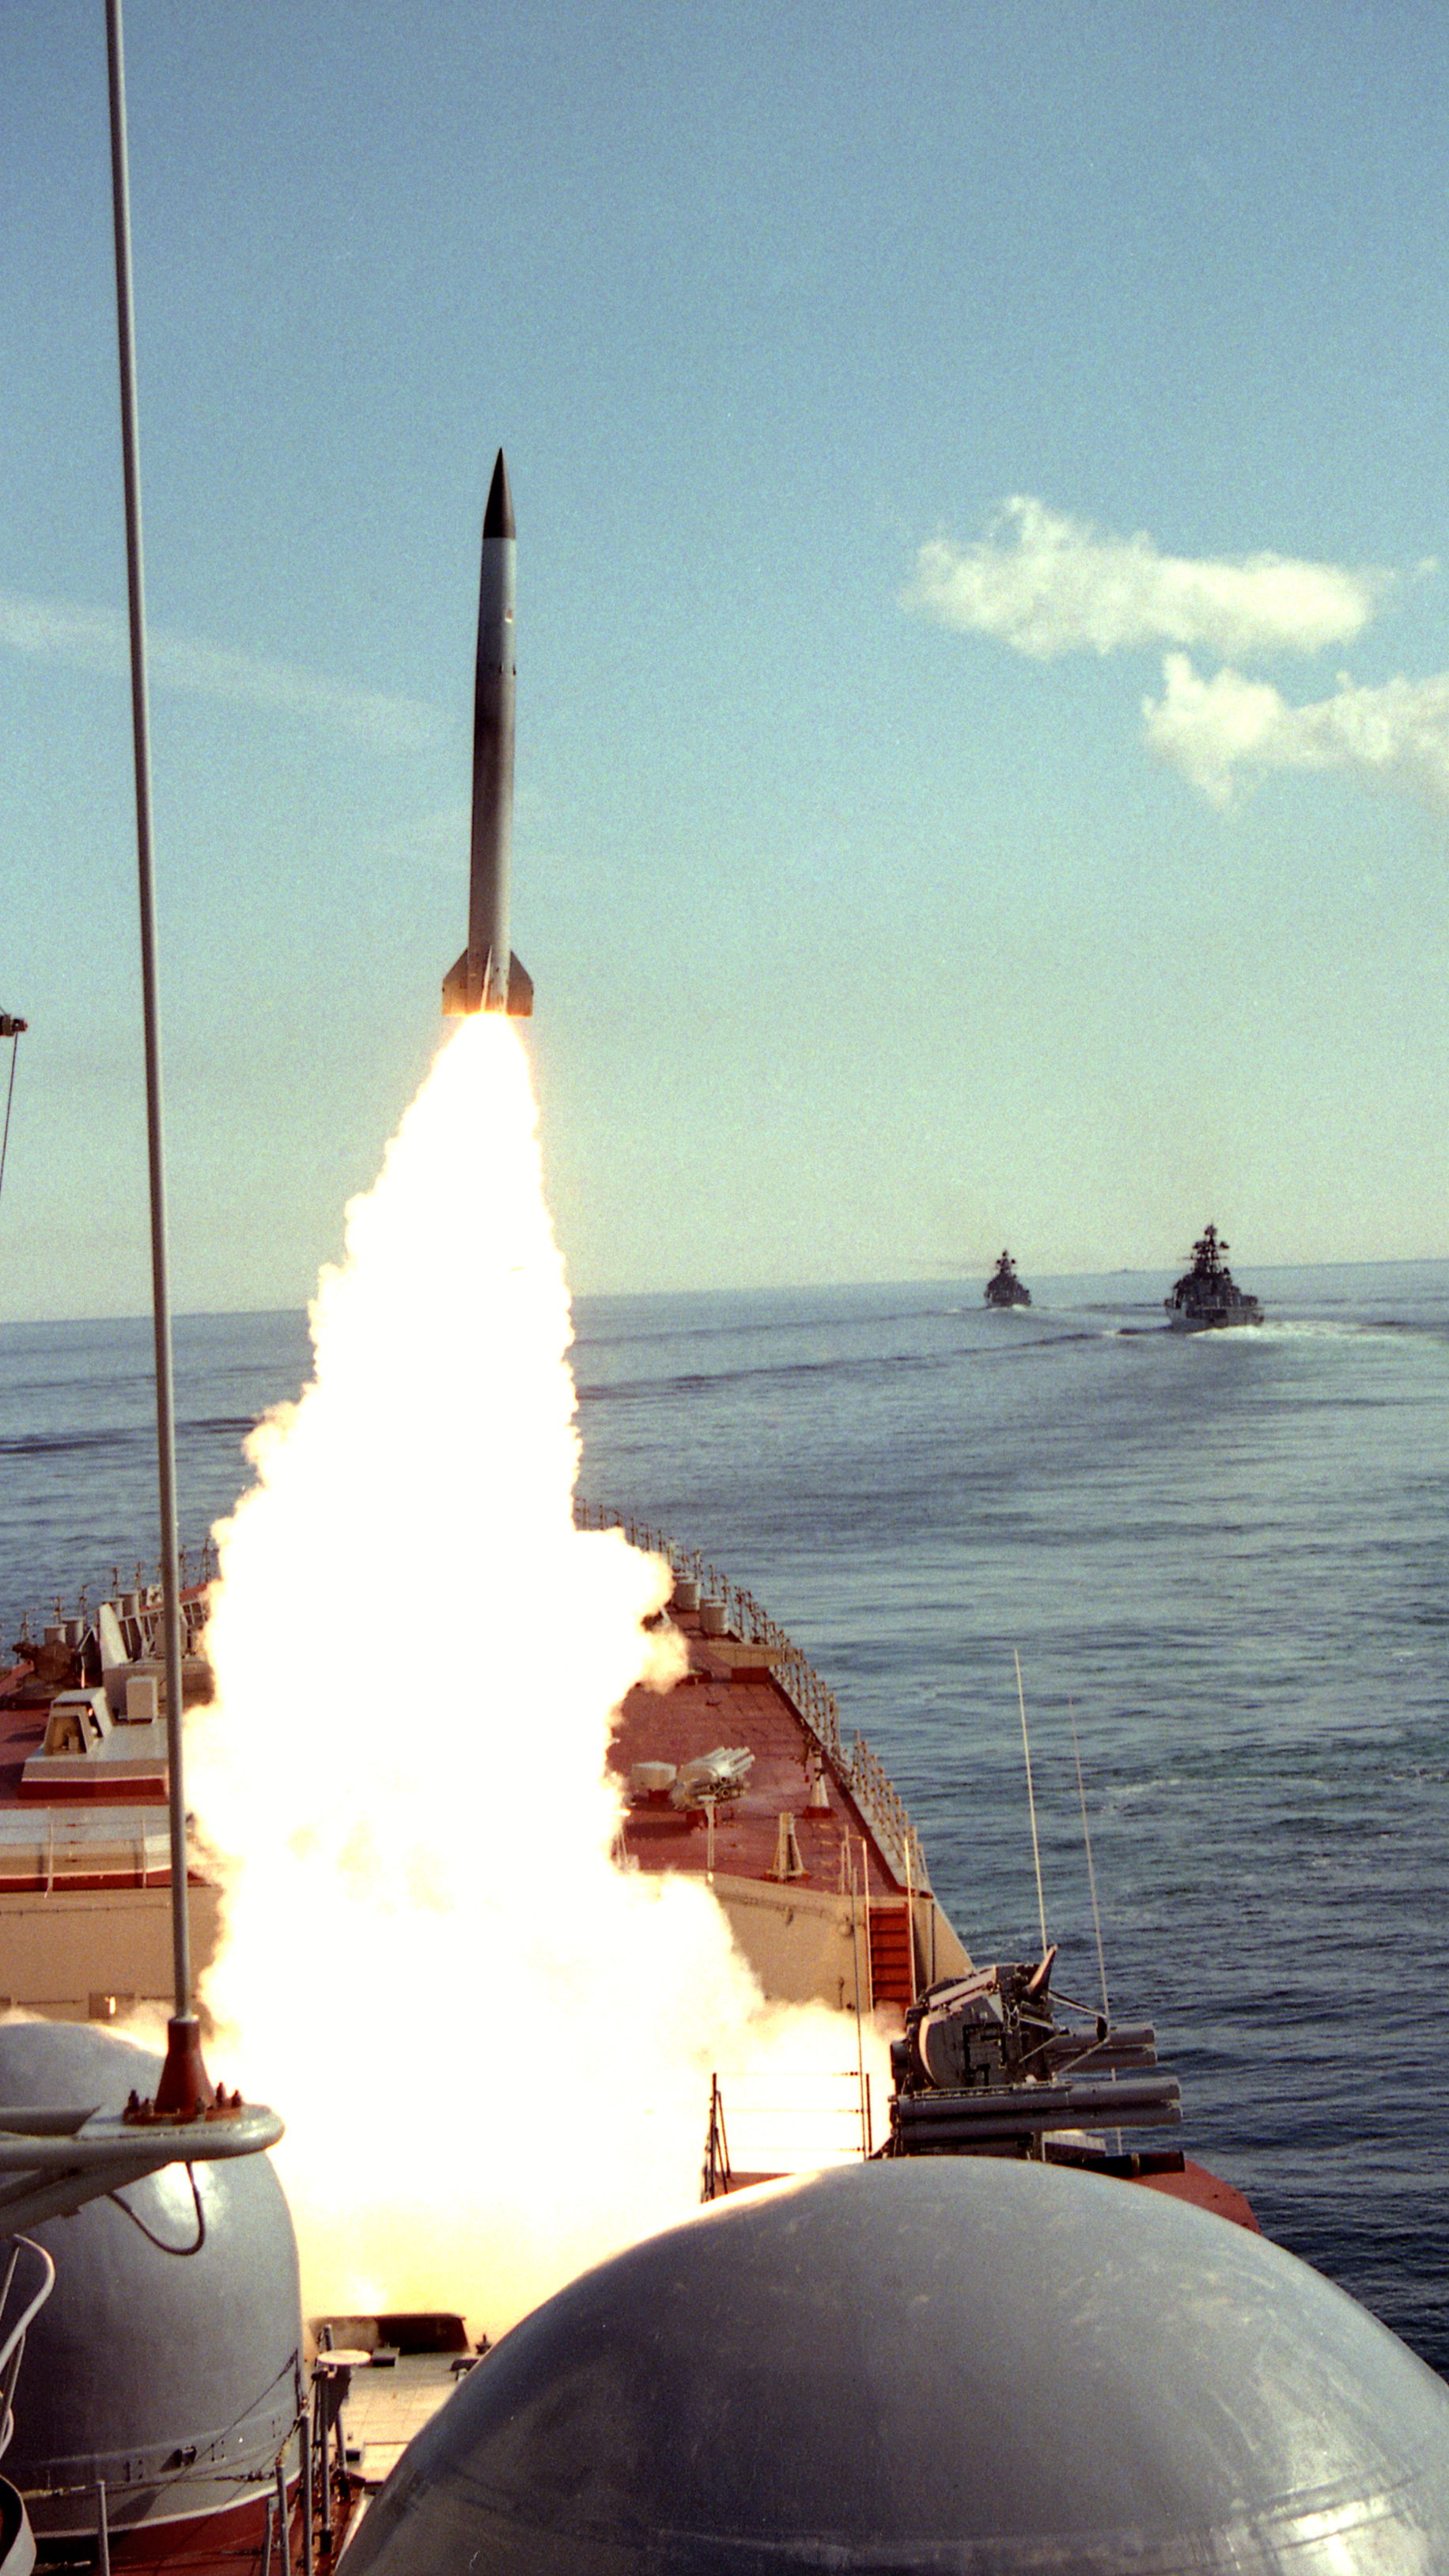 s-300f launch missile class kirov incrociatore cruiser missile lanciamissili